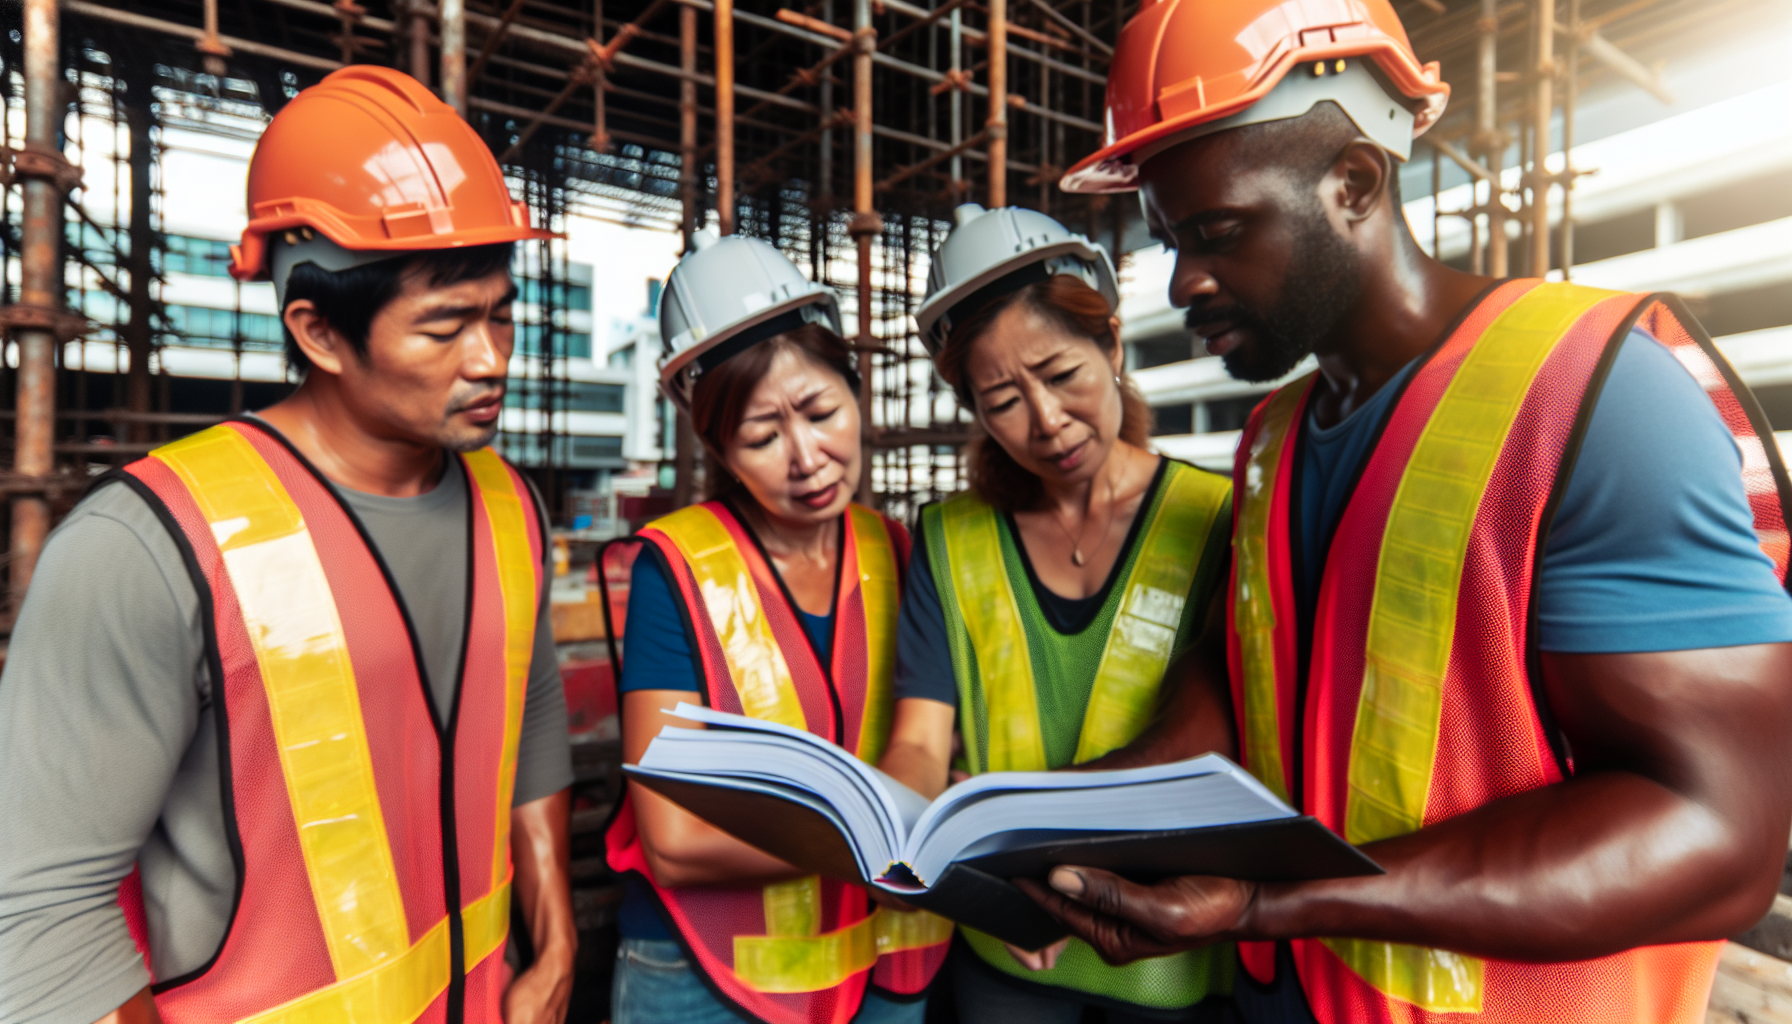 Construction workers reviewing employee handbook